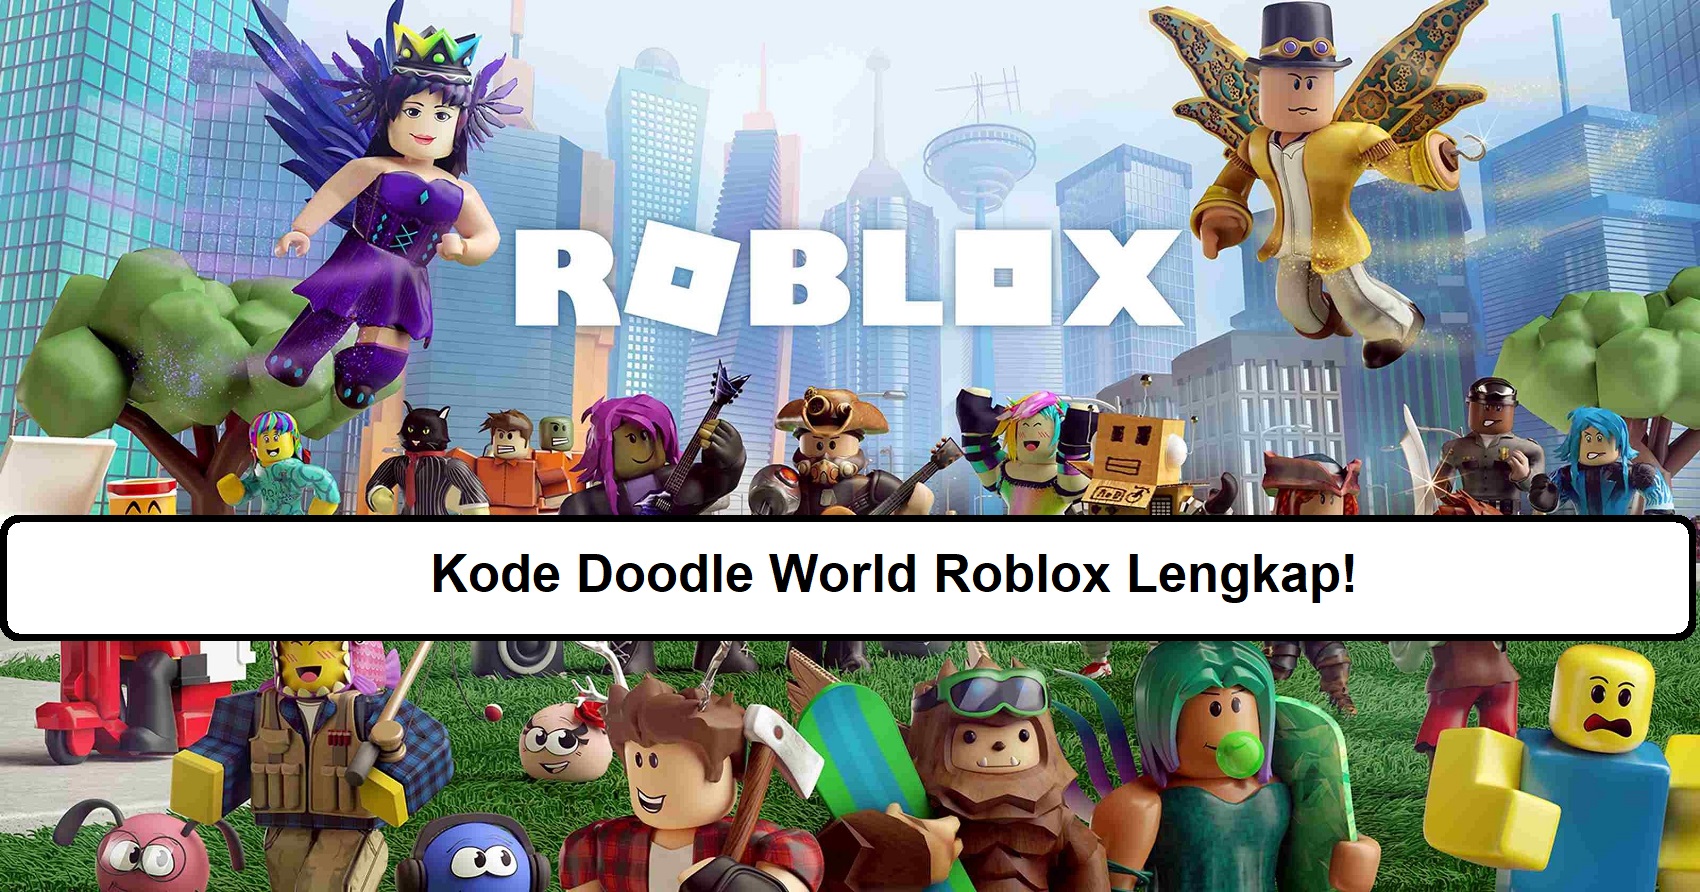 Kode Doodle World Roblox Lengkap!